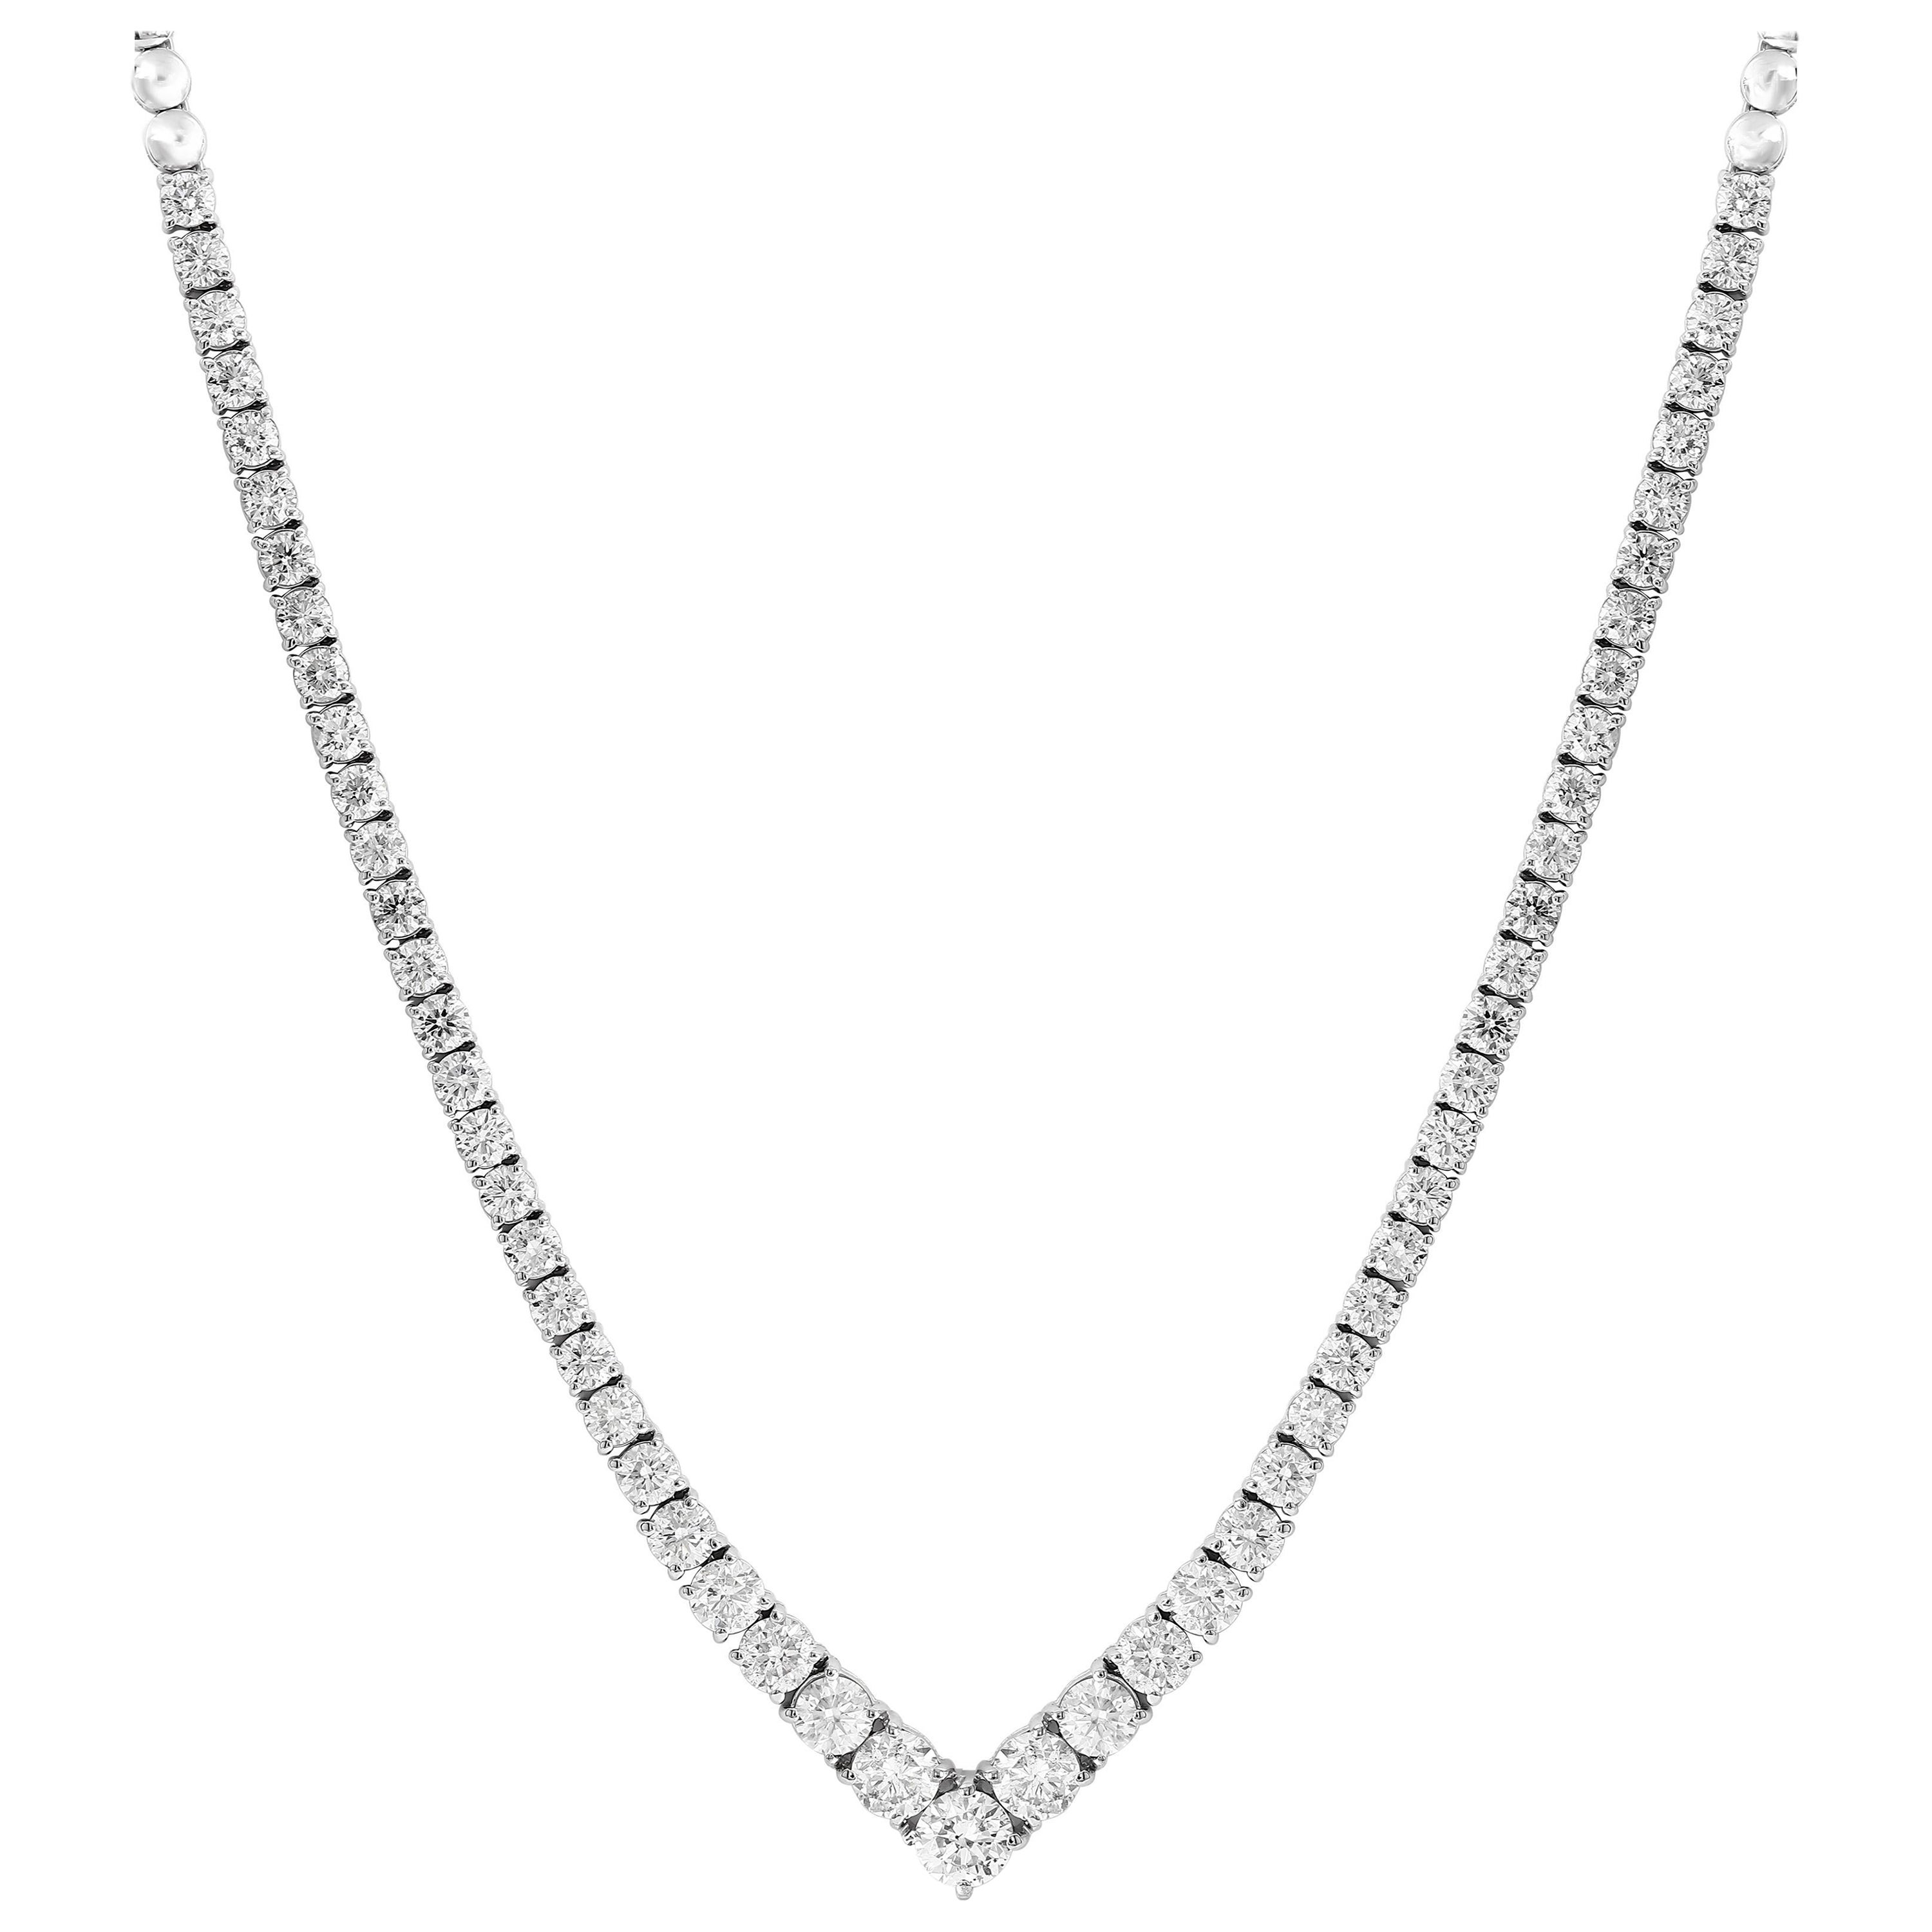 13.03 Carat Round Brilliant Diamond Graduating Necklace in 14K White Gold